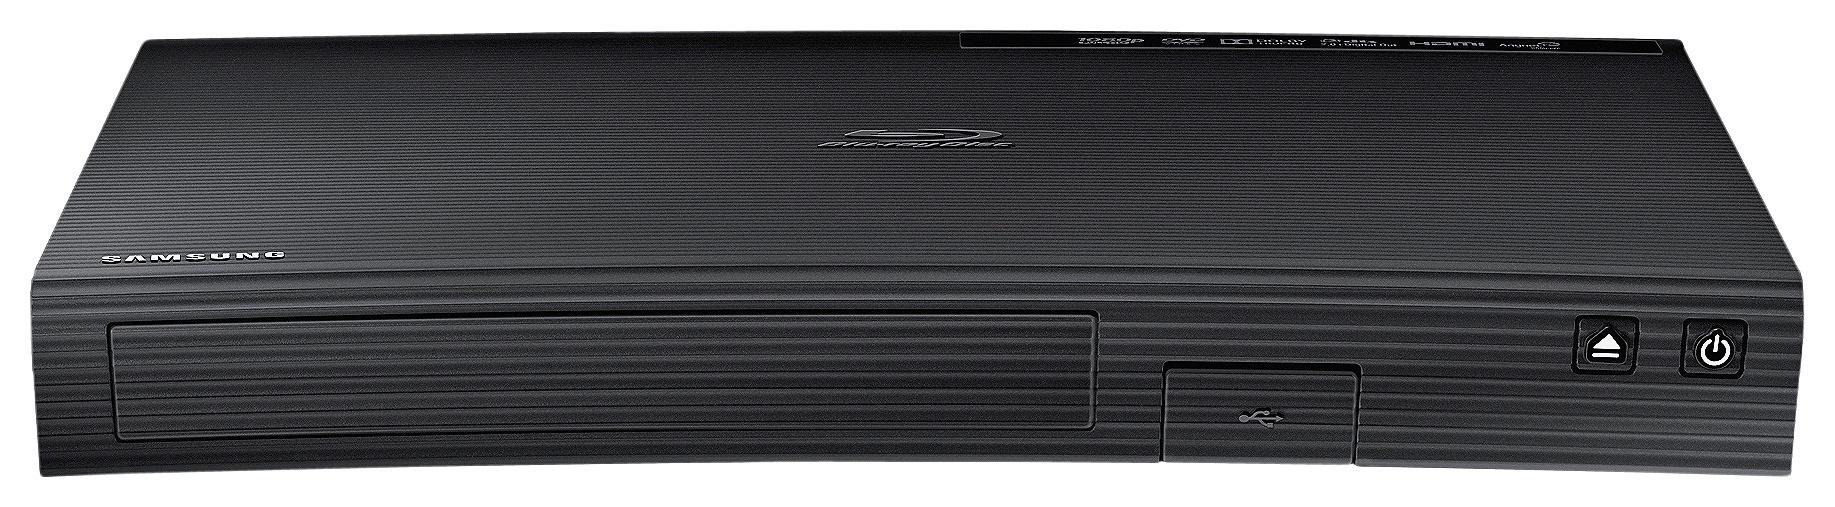 Samsung BDJ5500 3D Smart Blu-ray and DVD Player- Black